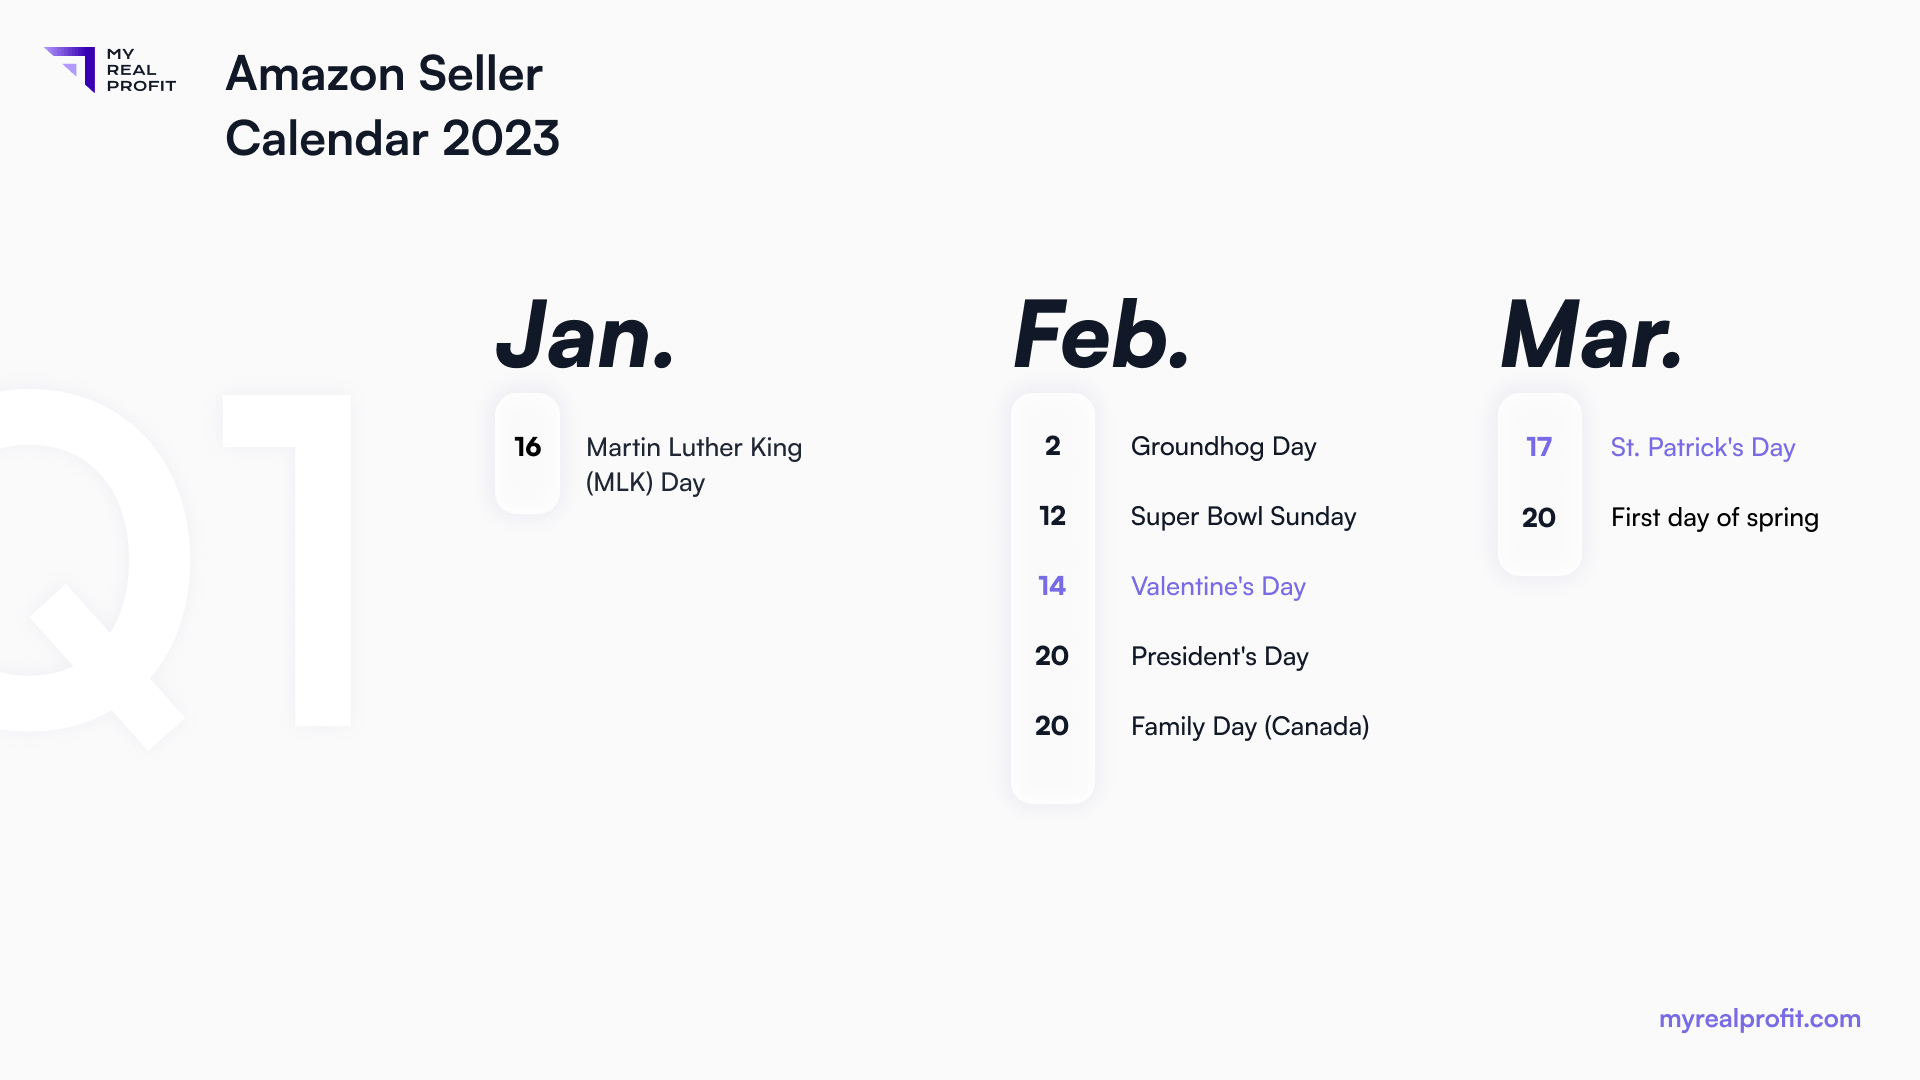 Amazon Seller Calendar 2023